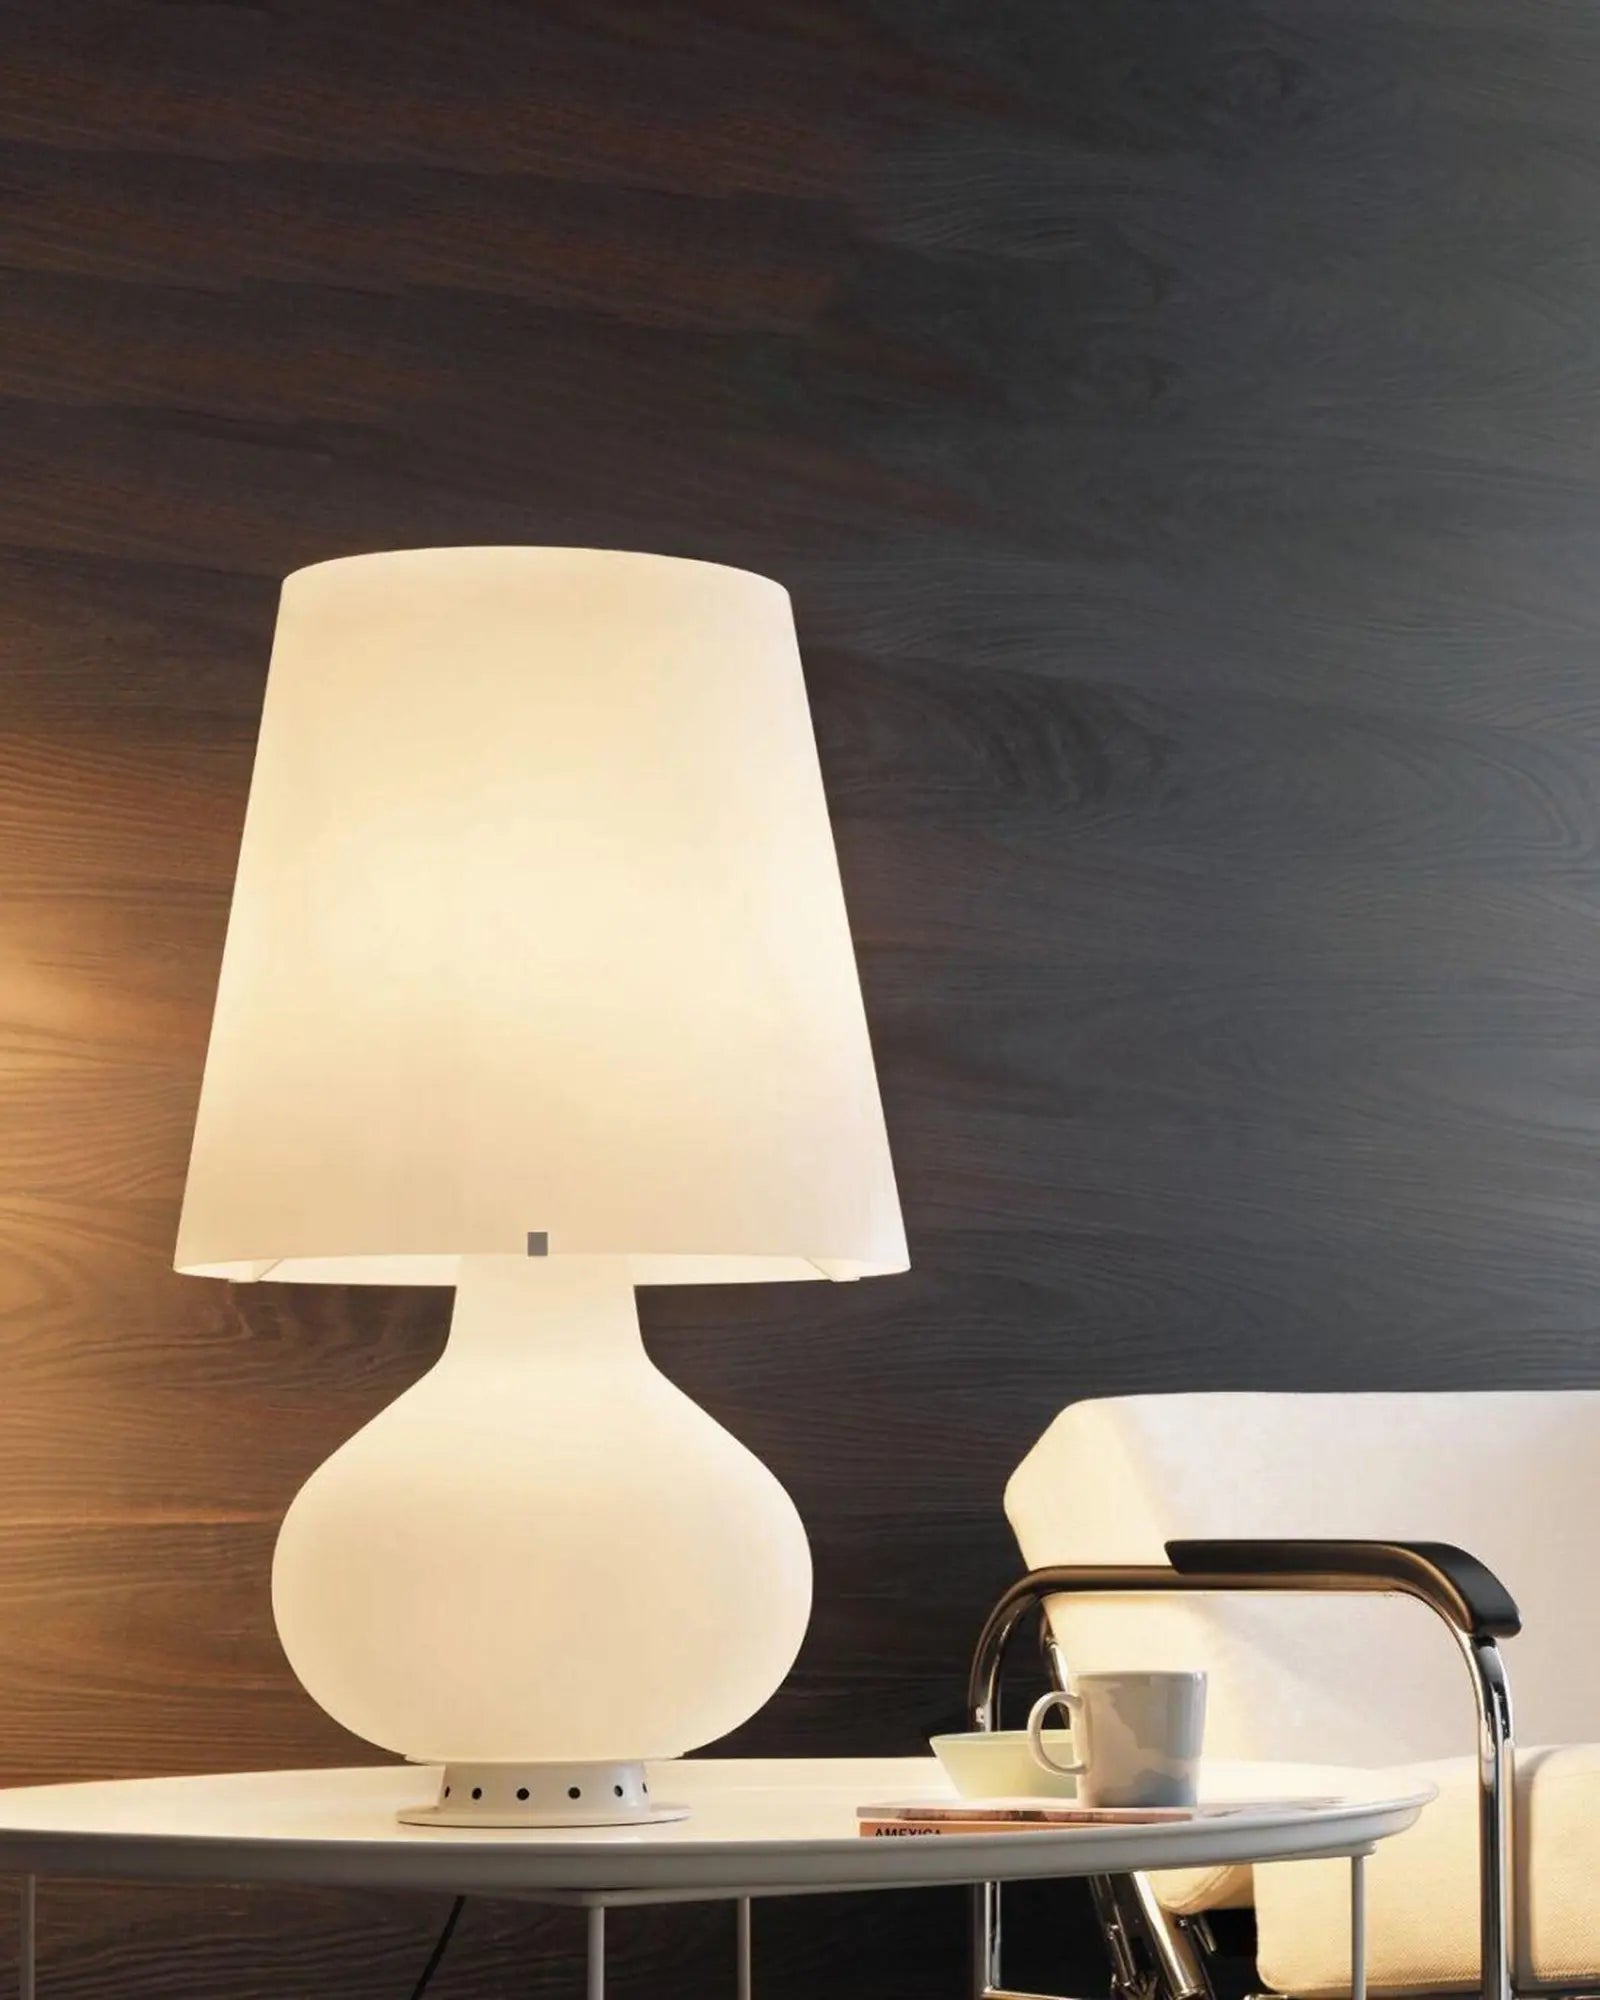 Fontana table lamp on a coffe table